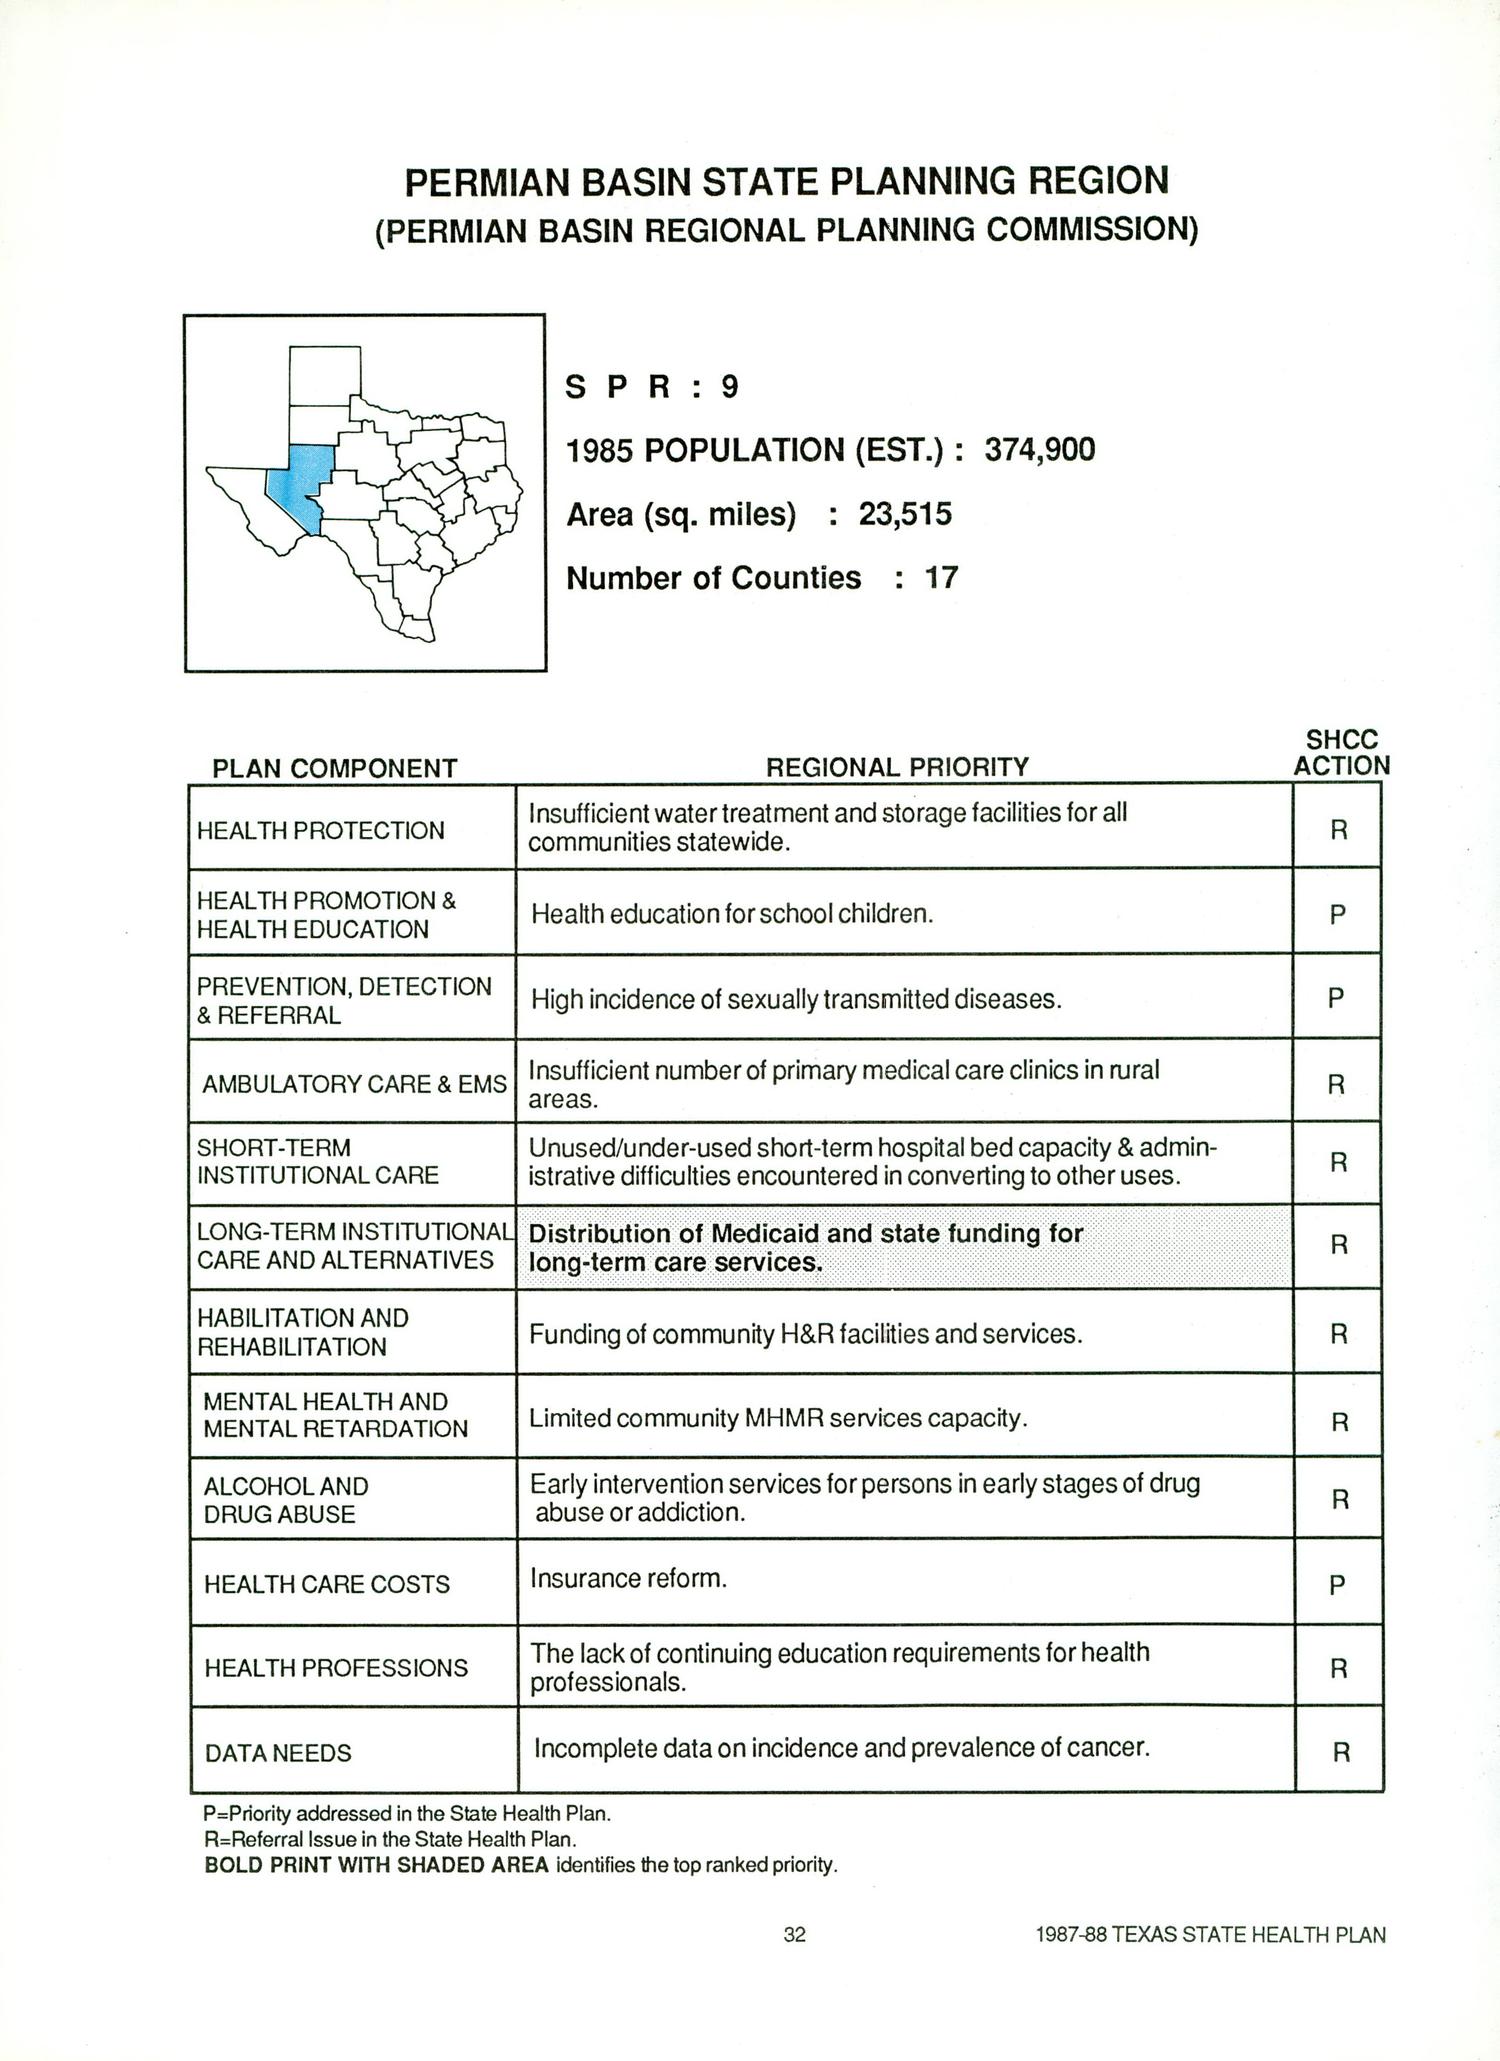 Texas State Health Plan: 1987-1988
                                                
                                                    32
                                                